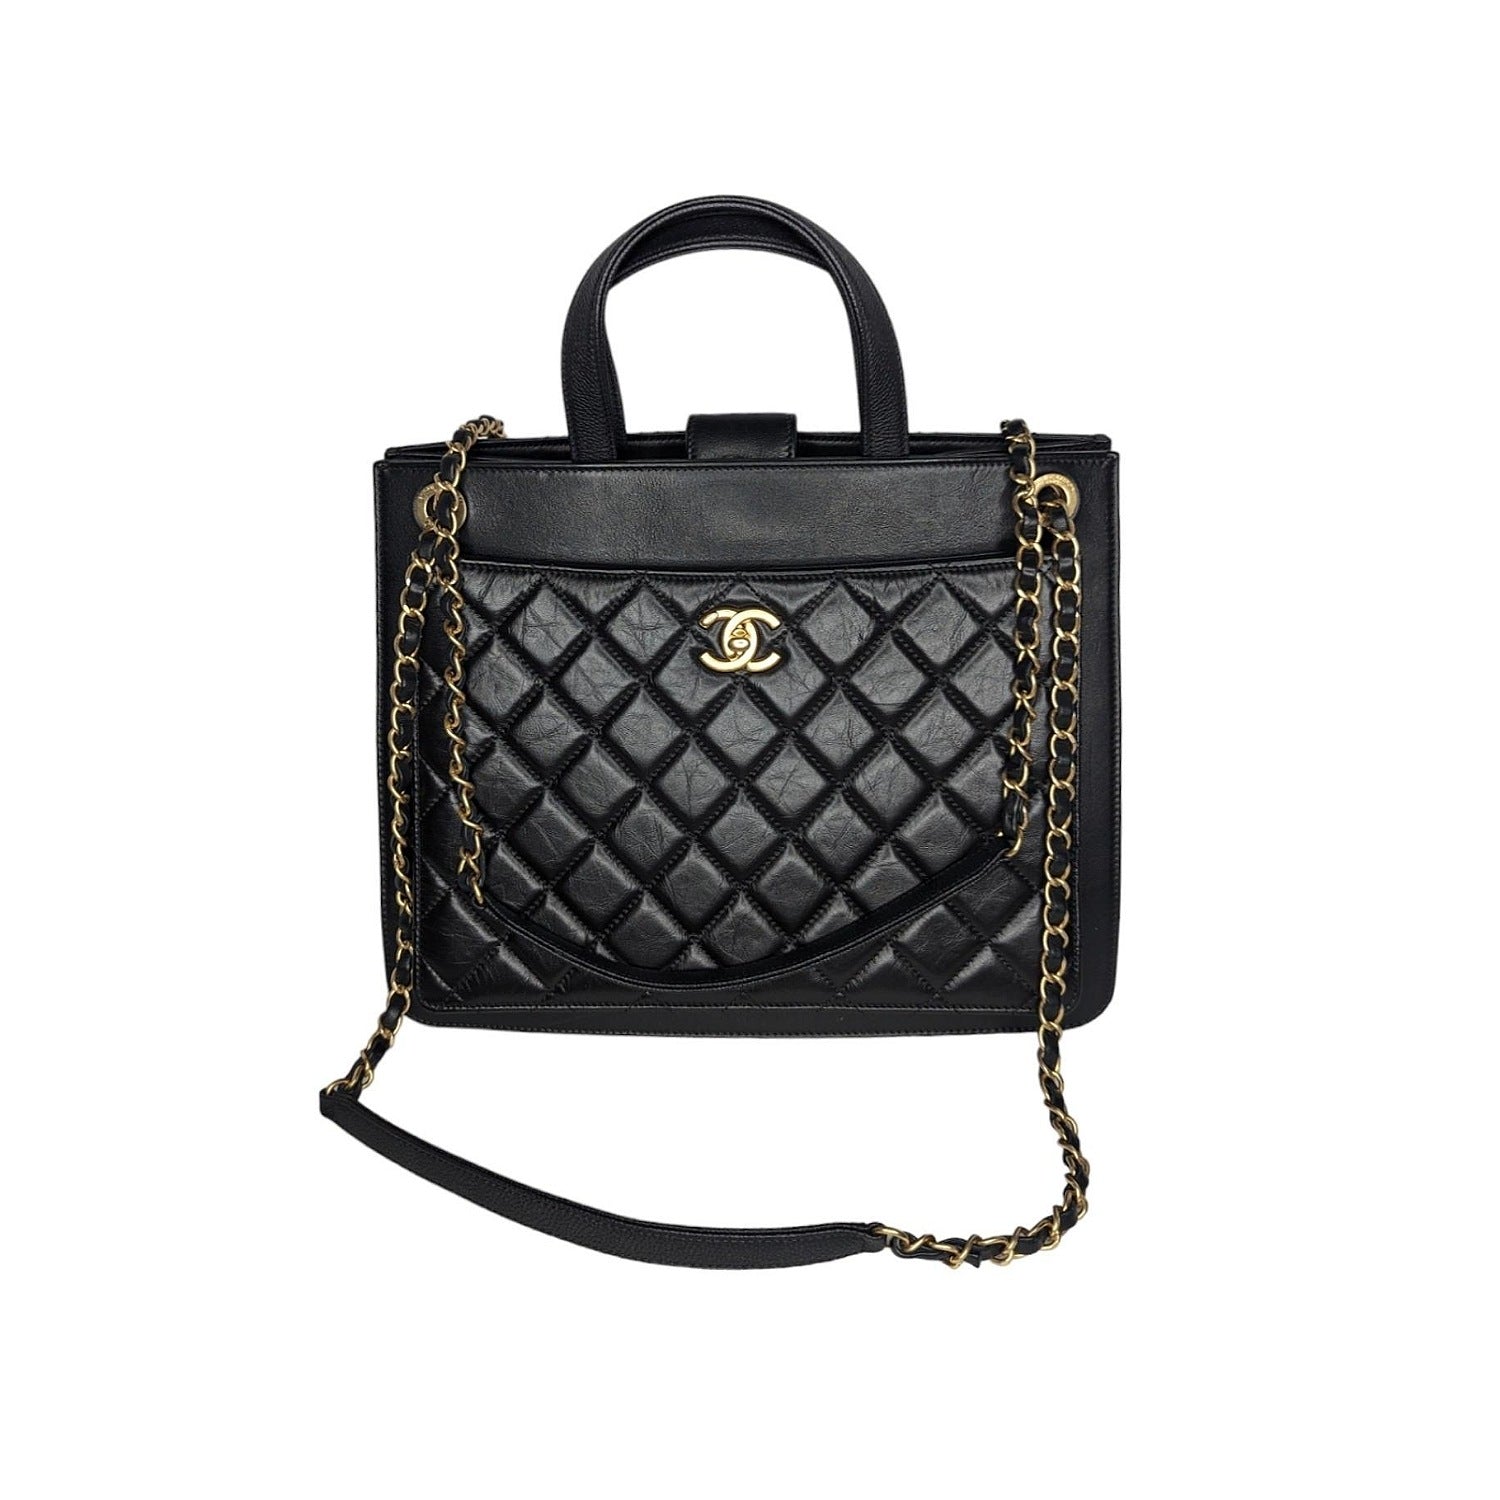 Chanel 2019 Business Affinity Backpack - Blue Backpacks, Handbags